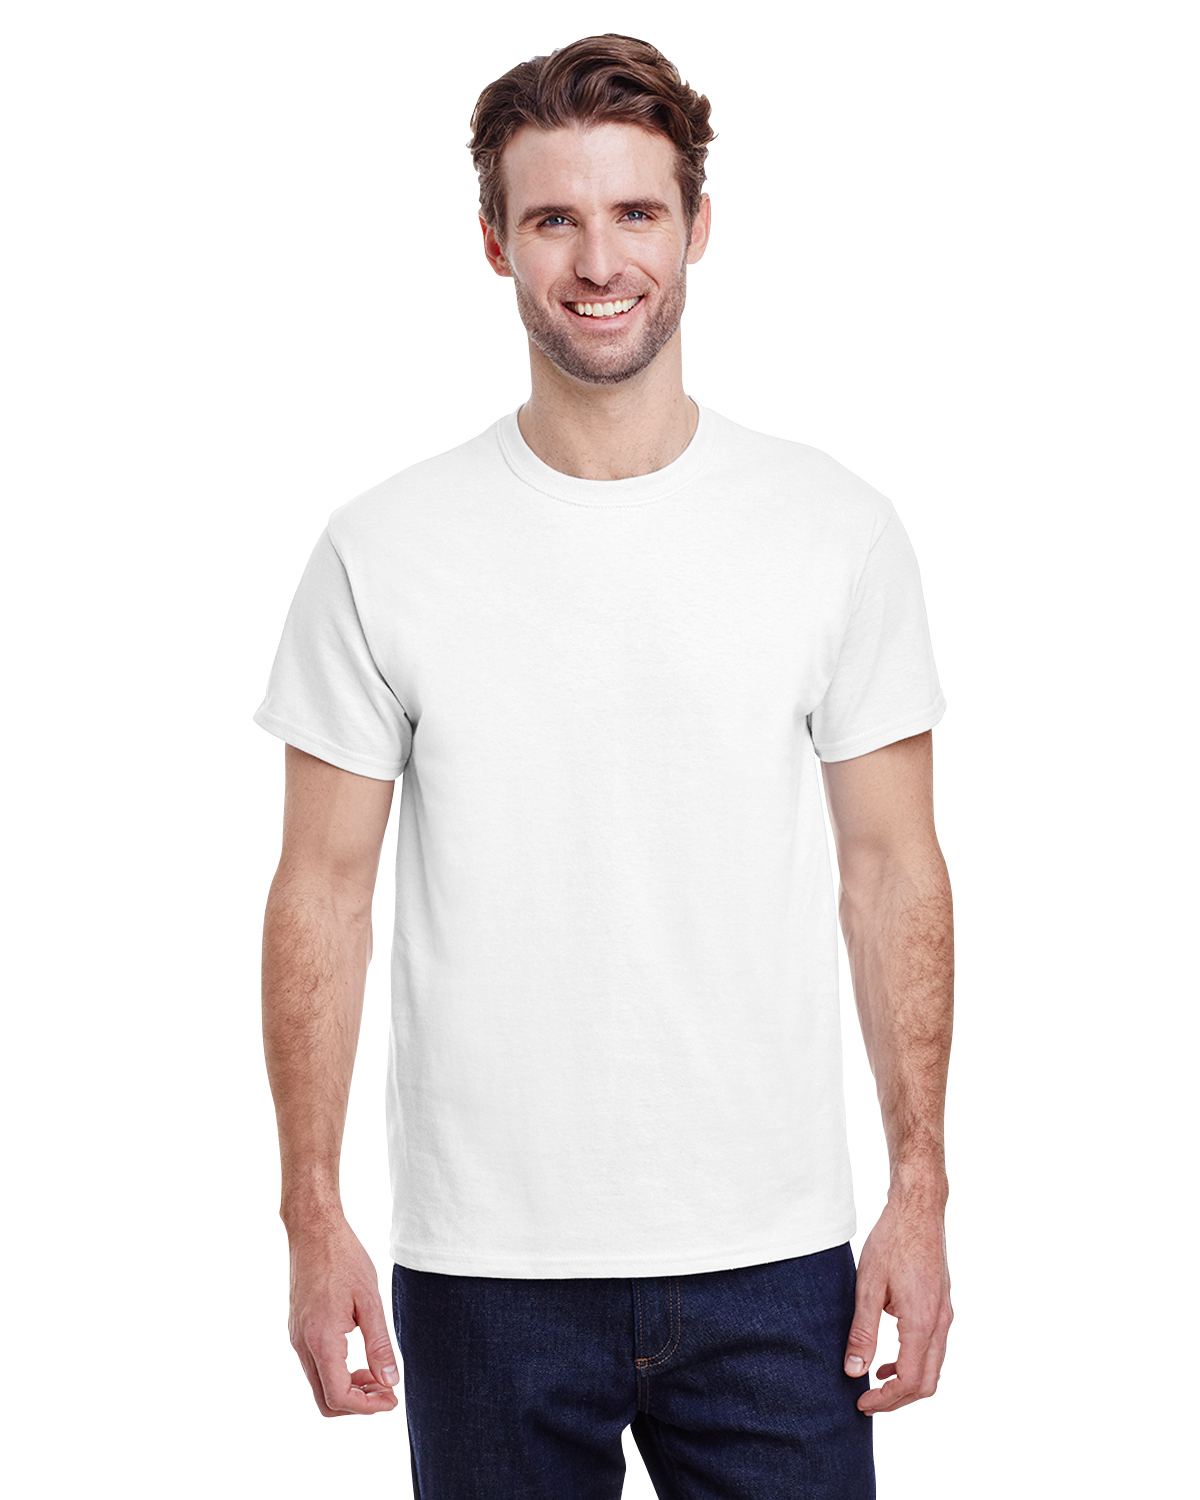 DISH Wireless  Gildan Ultra Cotton T-Shirt with Dish Wireless